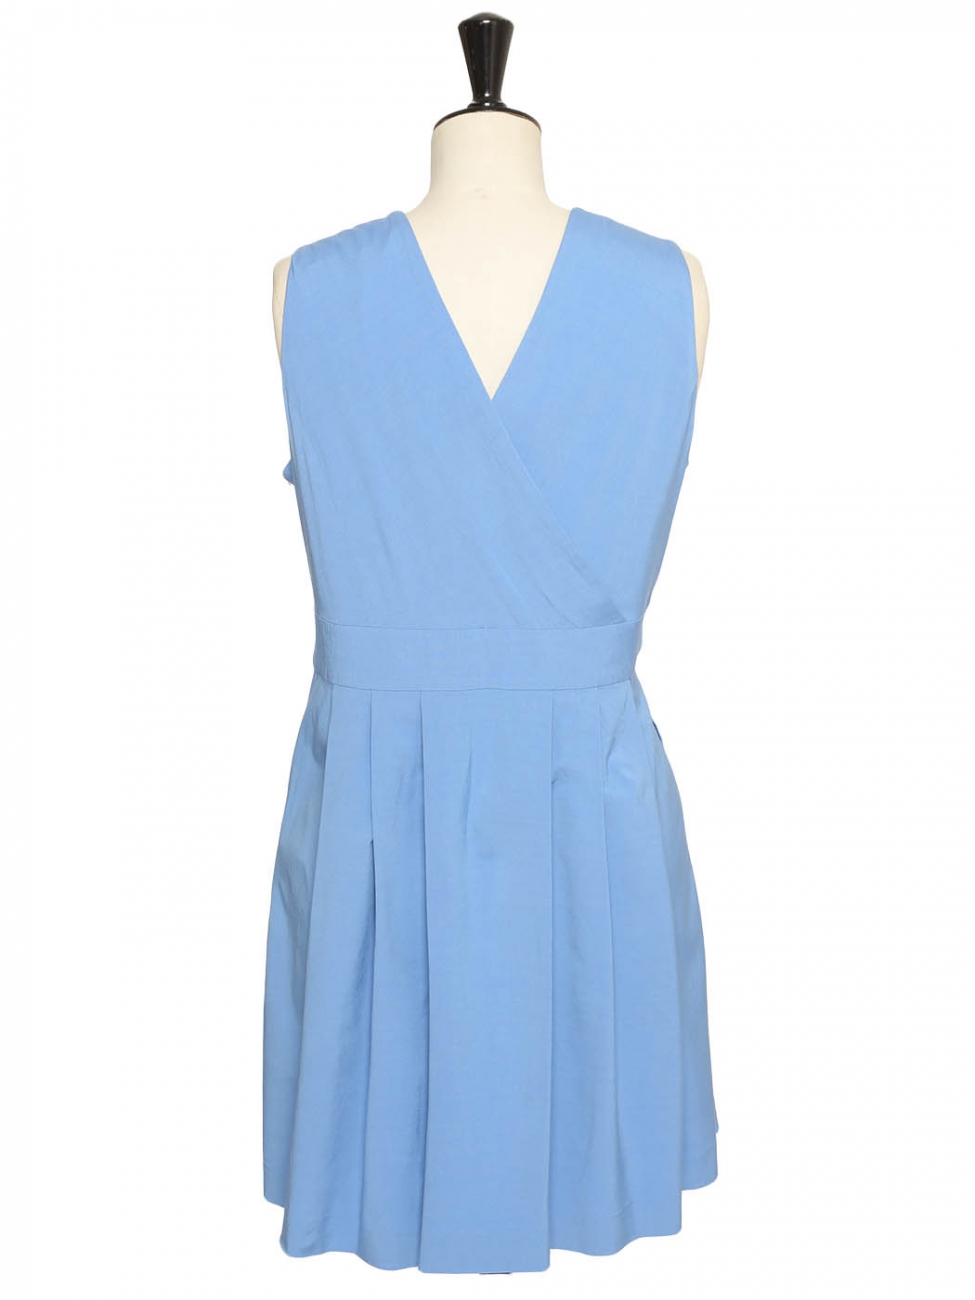 Boutique ESCADA strap Light Retail Size 40/42 neckline dress blue satin V large price €1300